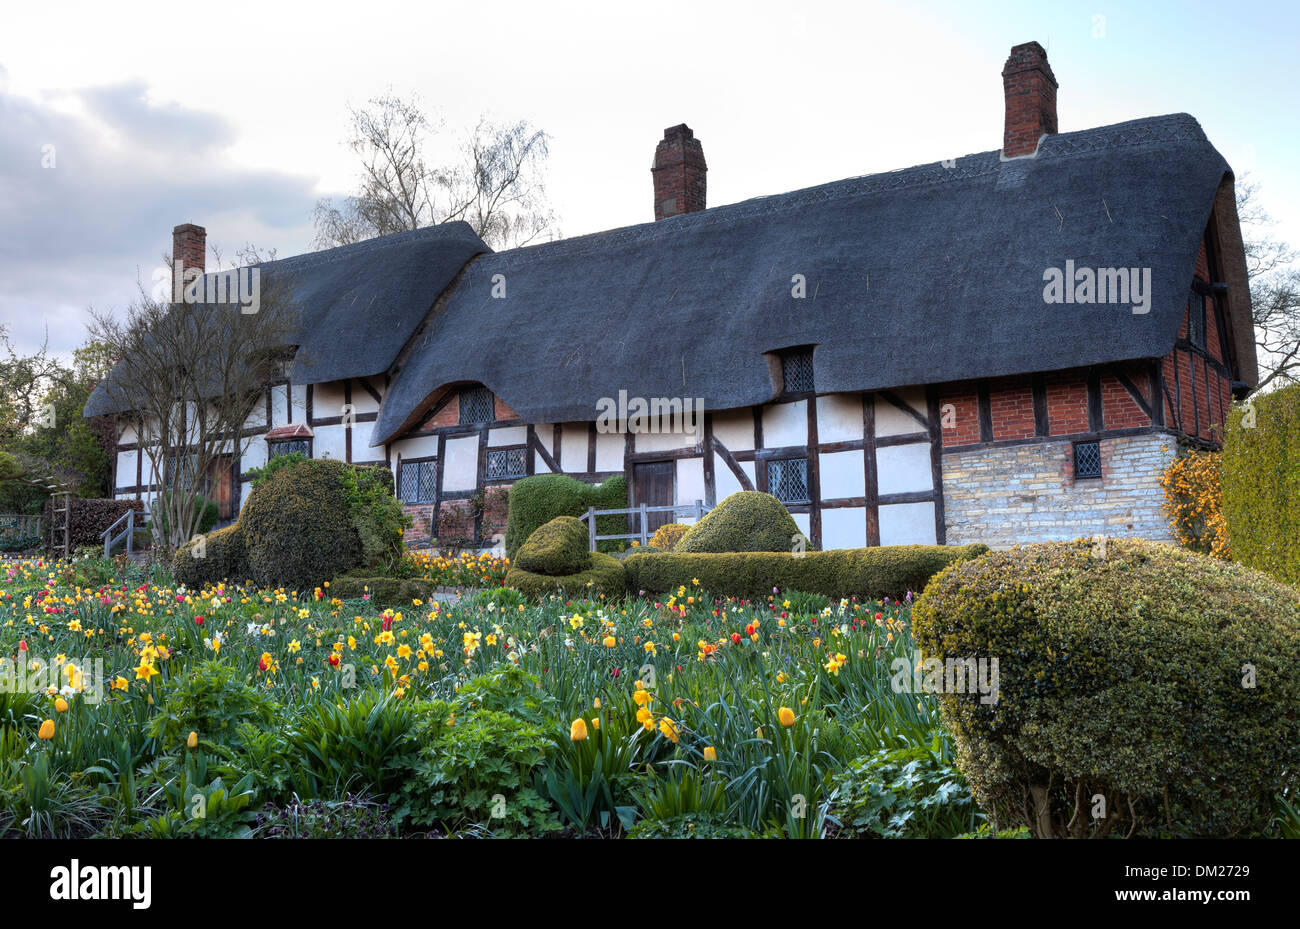 Anne Hathaway's Cottage, Stratford upon Avon, Warwickshire, en Angleterre. Banque D'Images